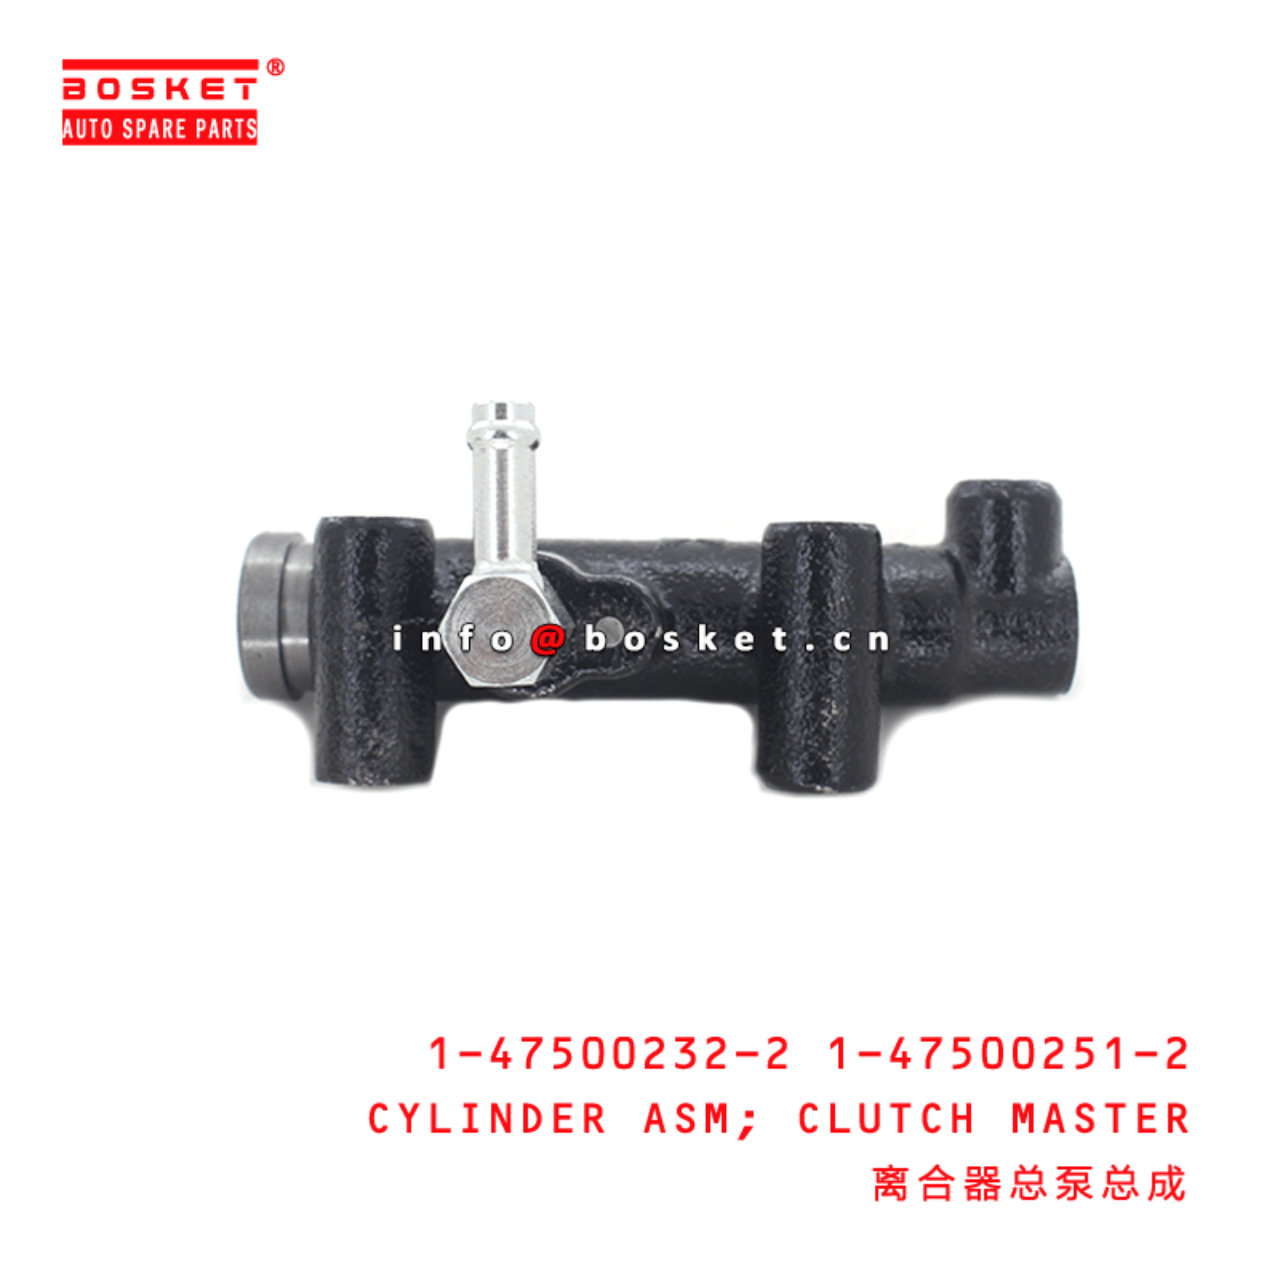 1-47500232-2 1-47500251-2 Clutch Master Cylinder Assembly 